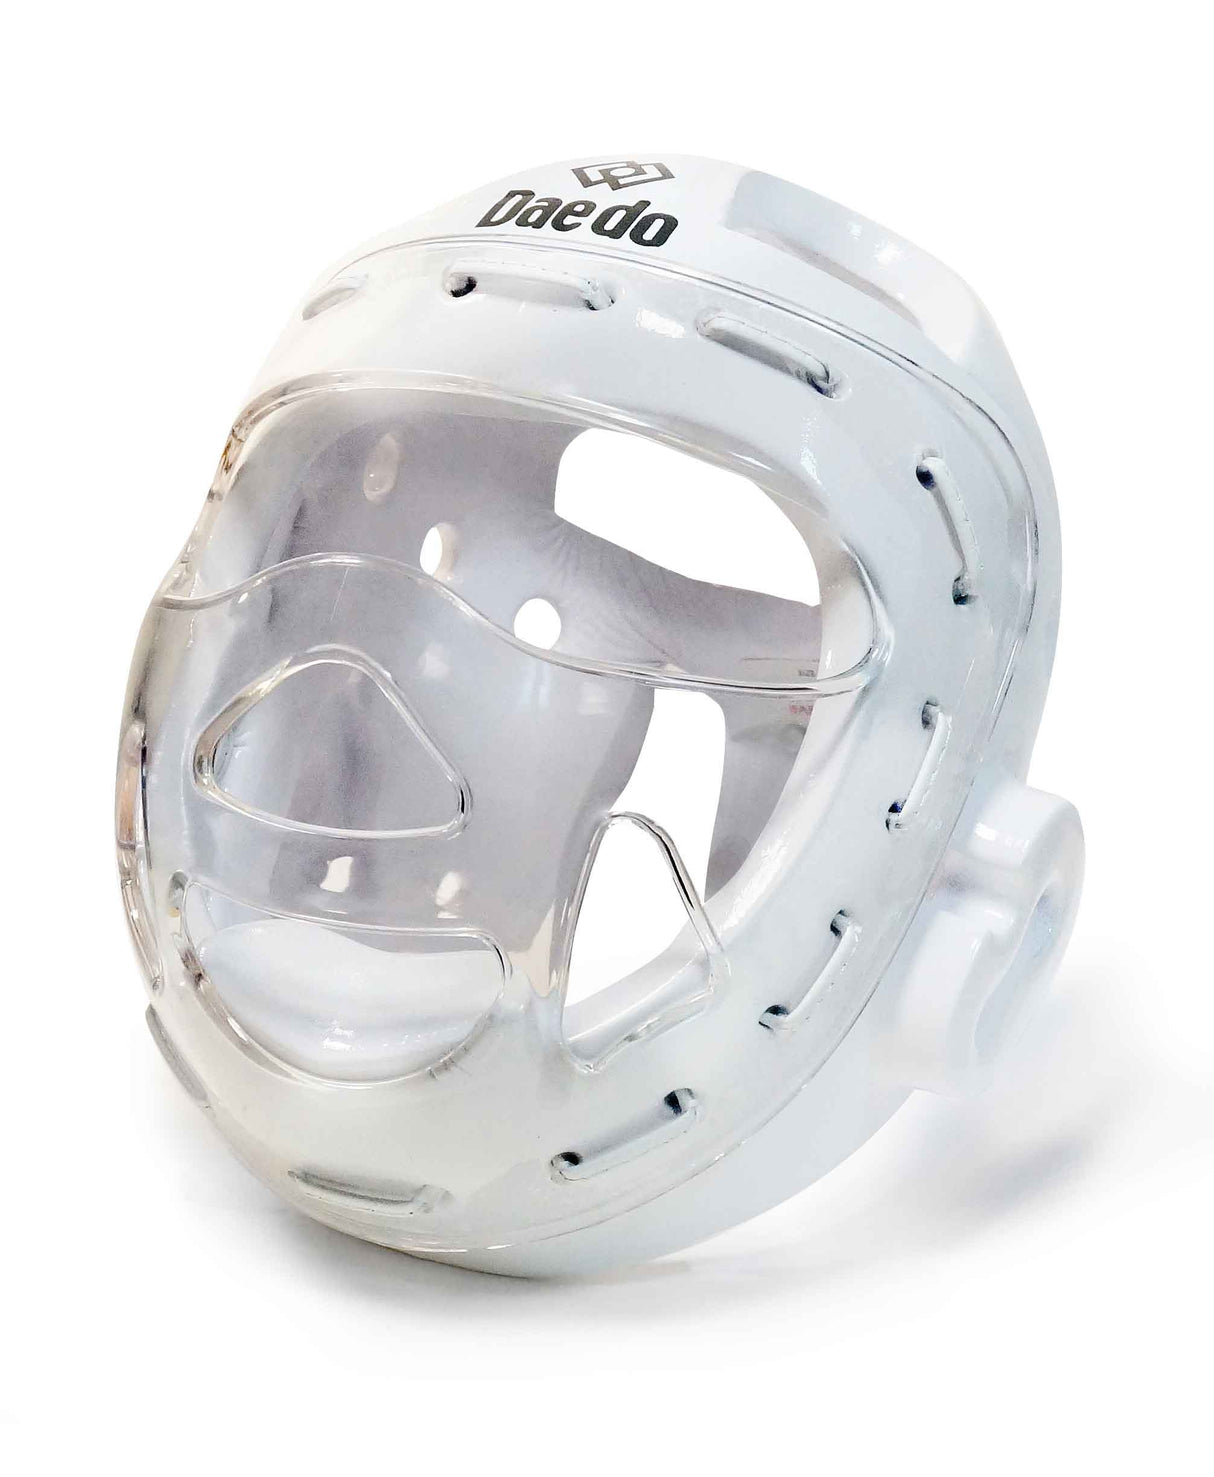 Daedo Kopfschutz WT Maske - weiß, 20915W